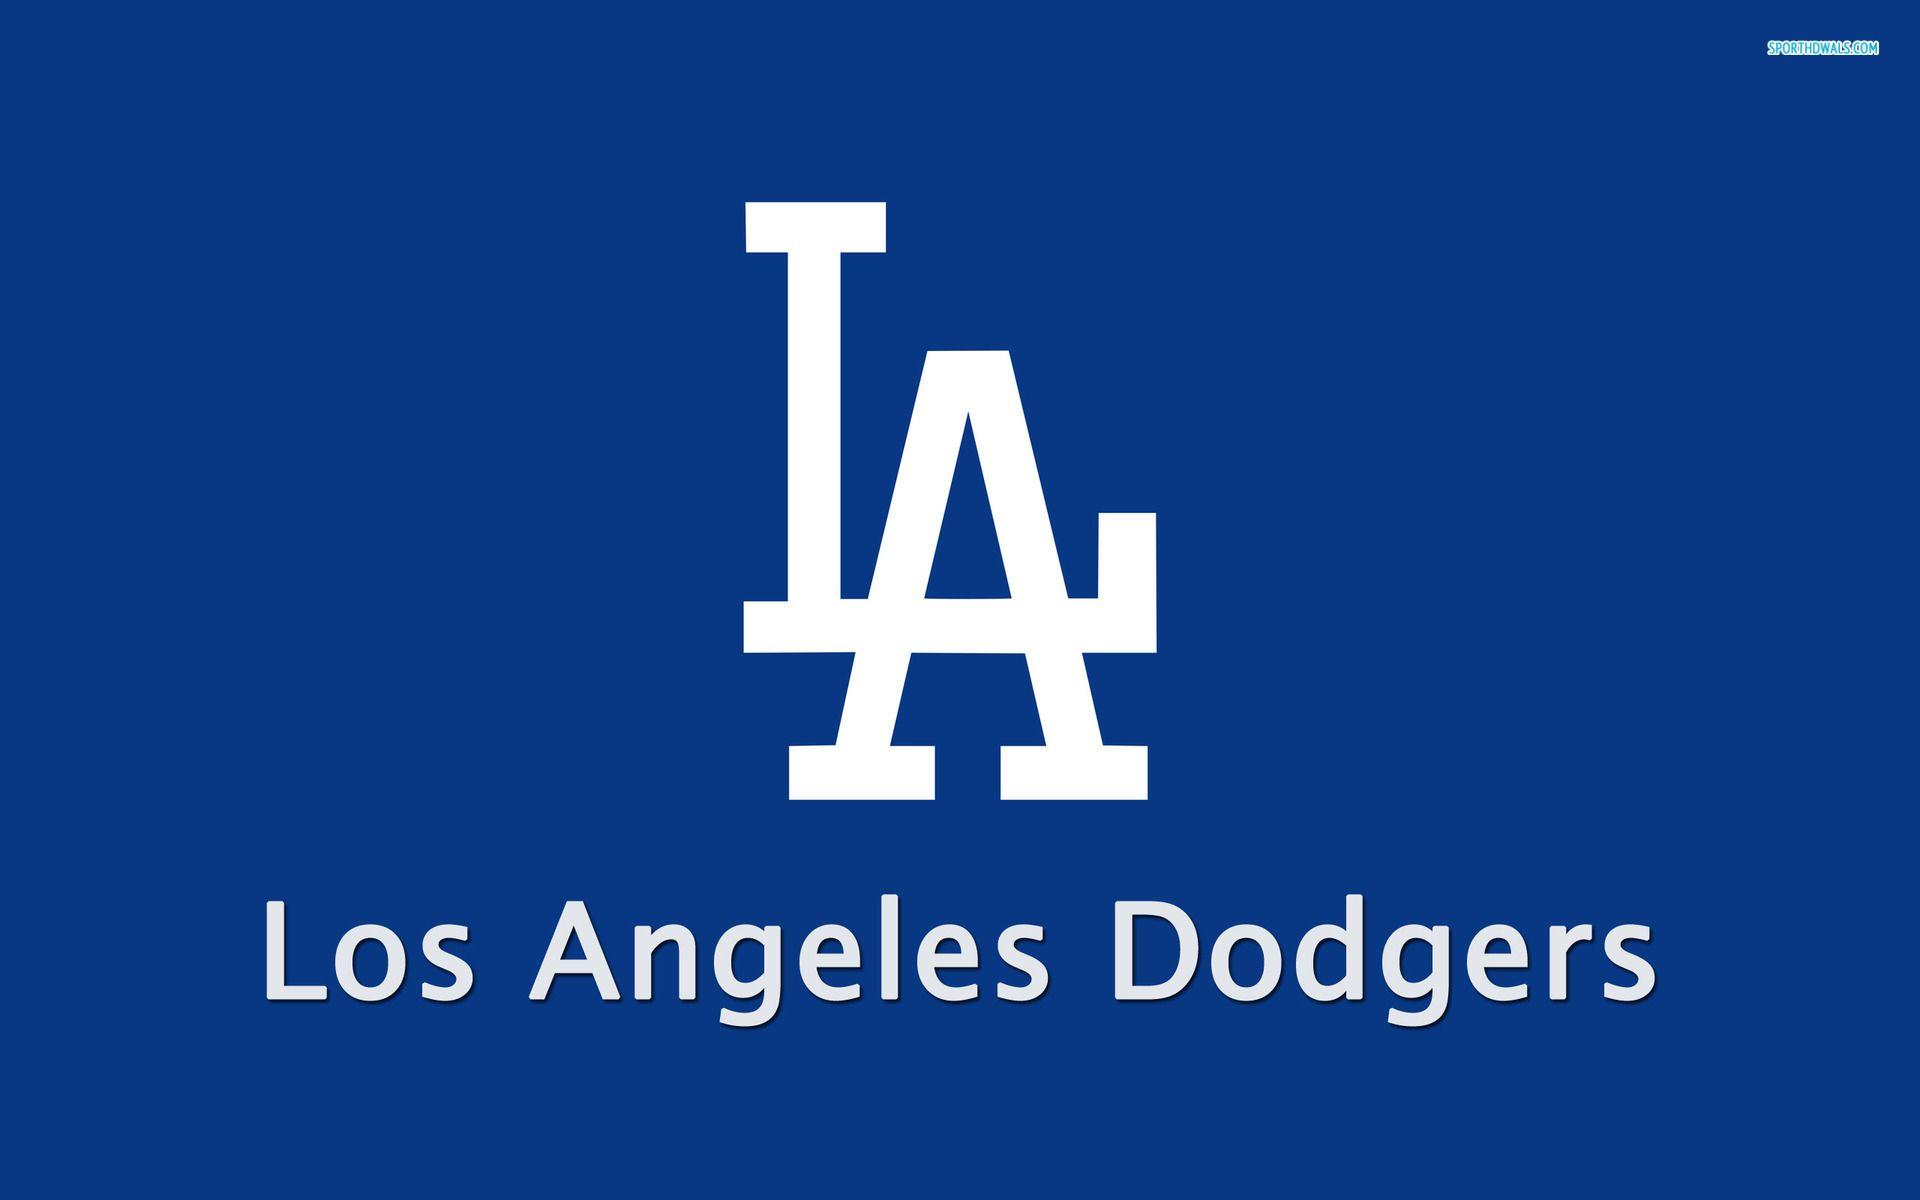 Free Los Angeles Dodgers desktop wallpaper. Los Angeles Dodgers